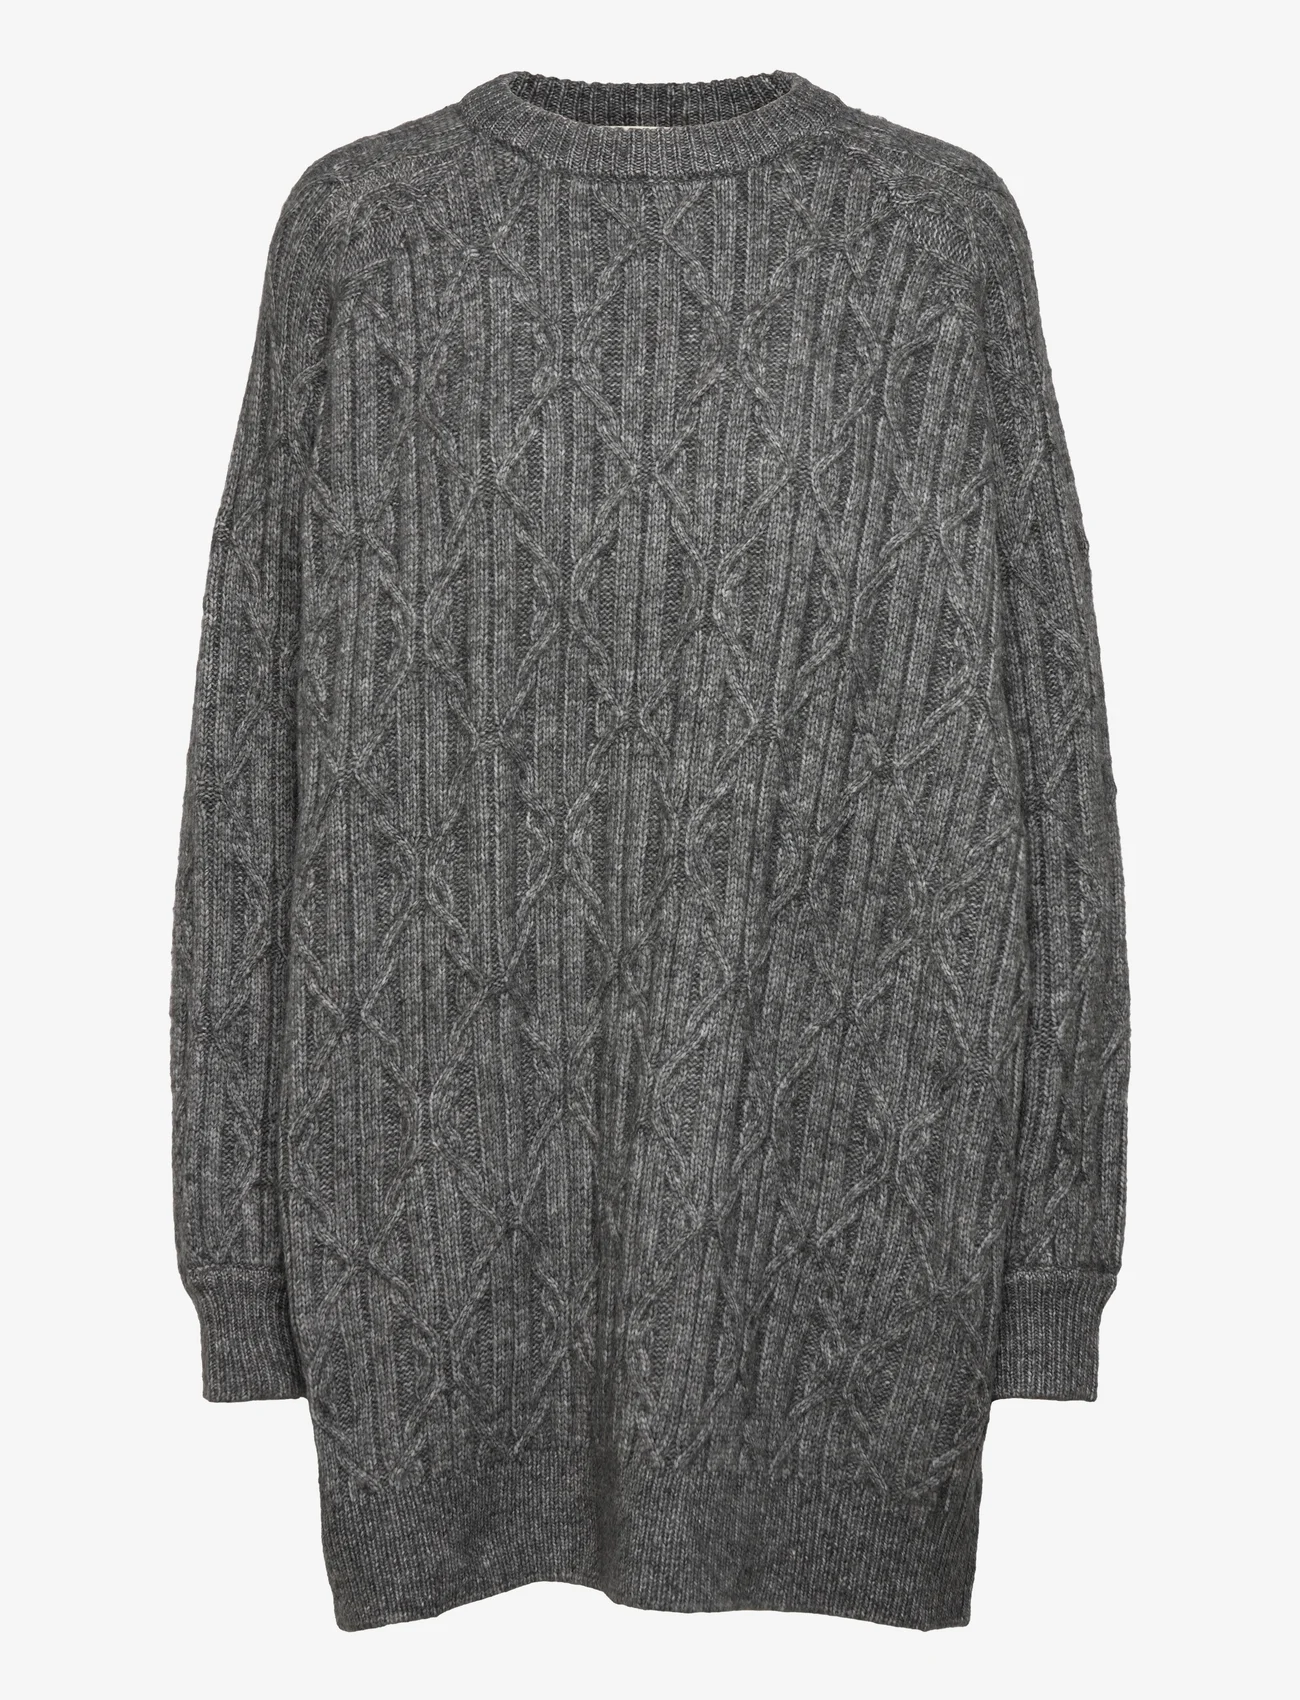 Moshi Moshi Mind - vision knit cable - swetry - dark grey melange - 0